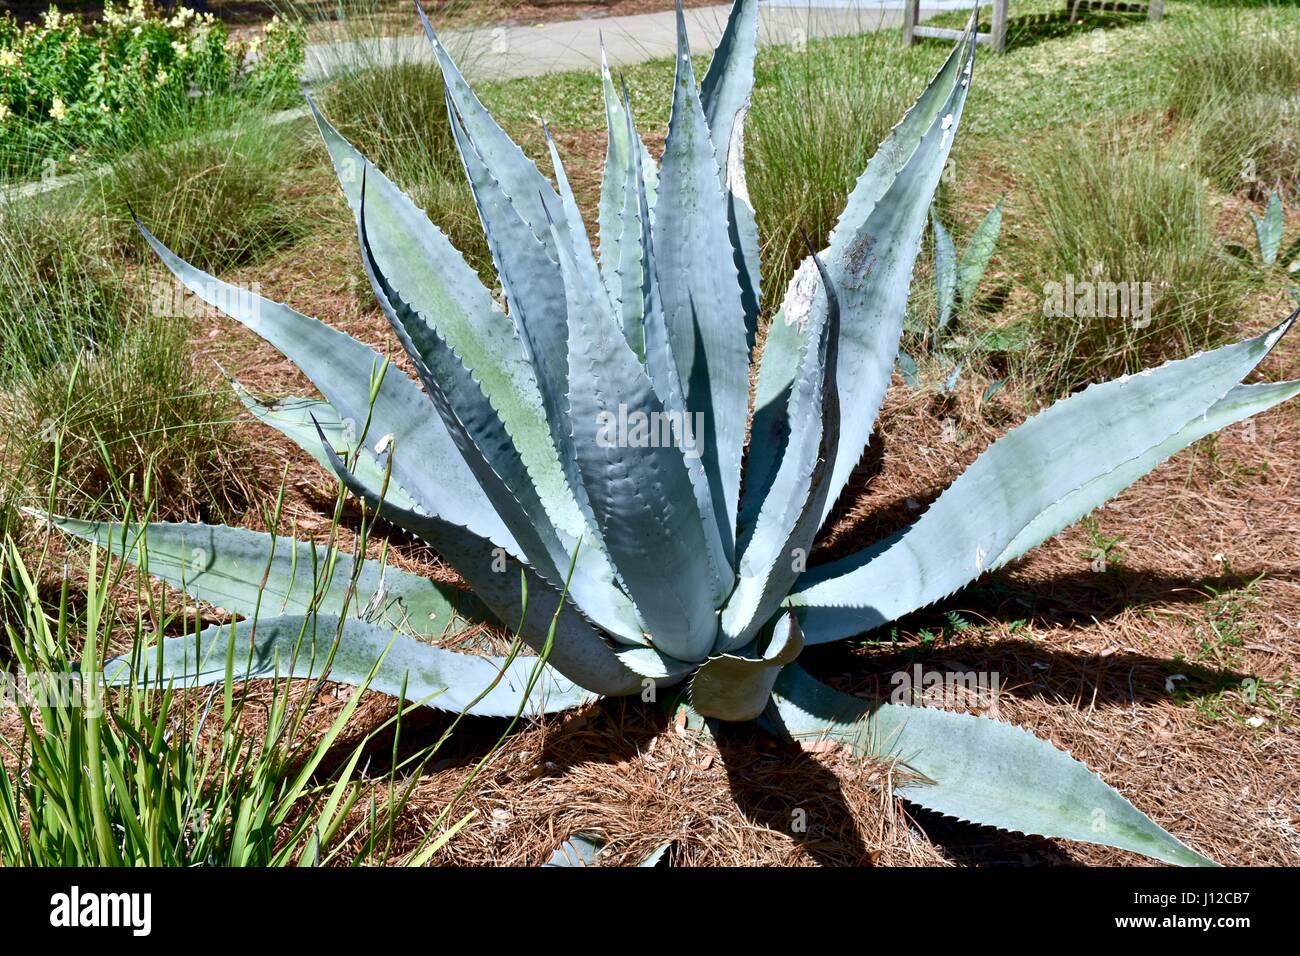 Aloe vera plant Stock Photo